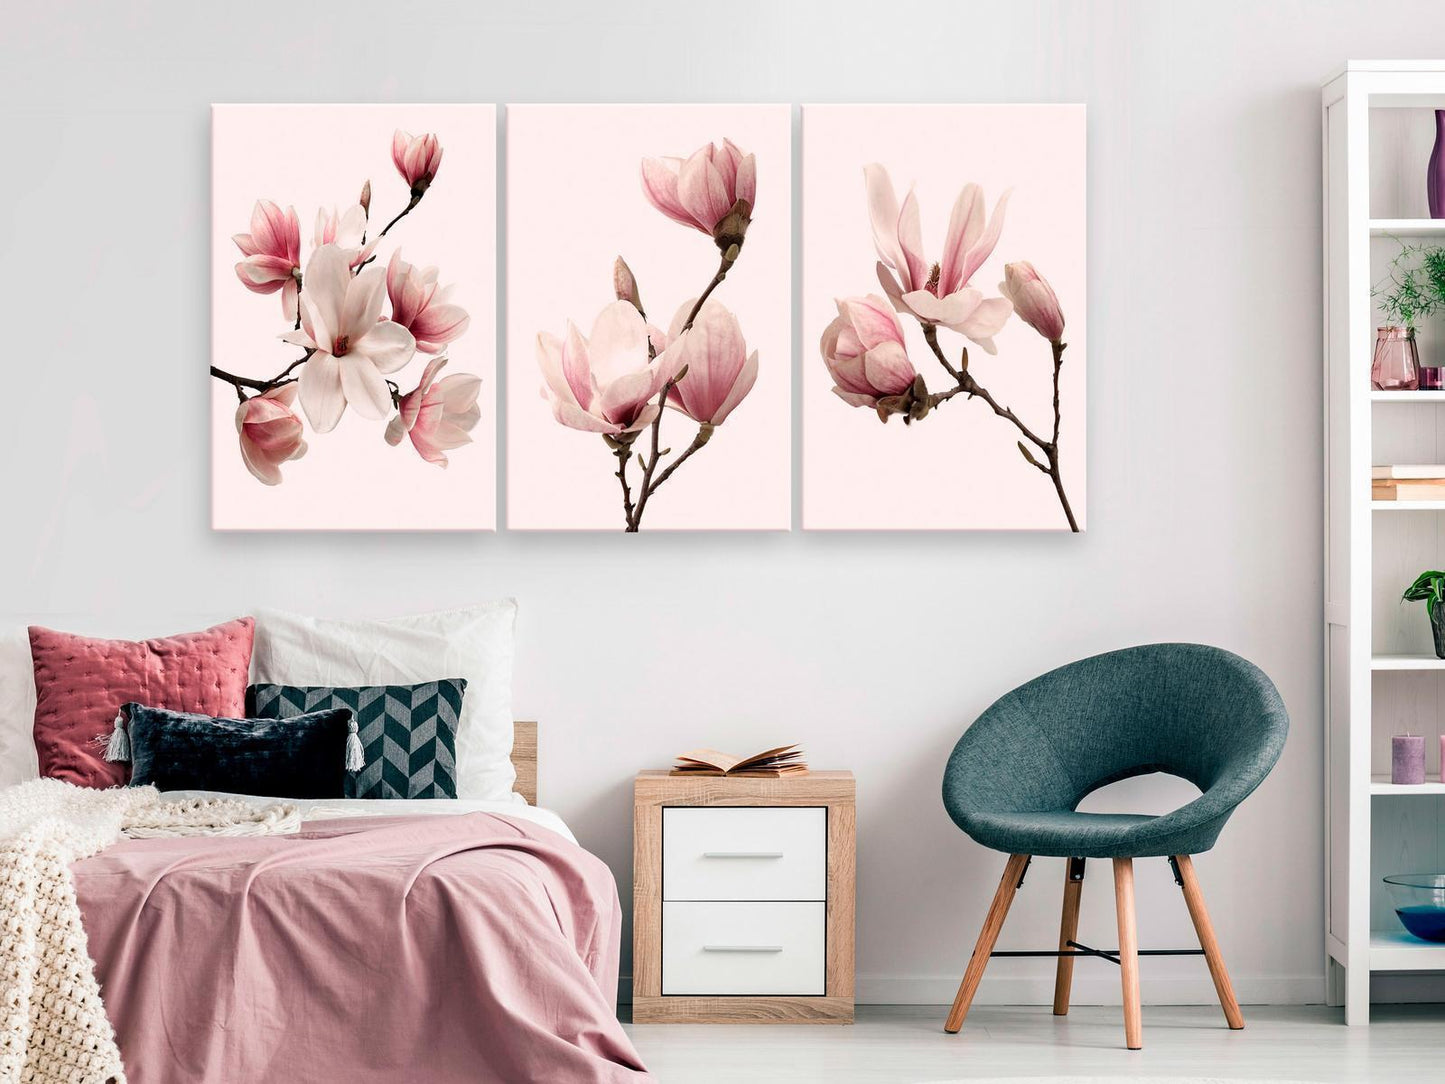 Painting - Spring Magnolias (3 Parts)